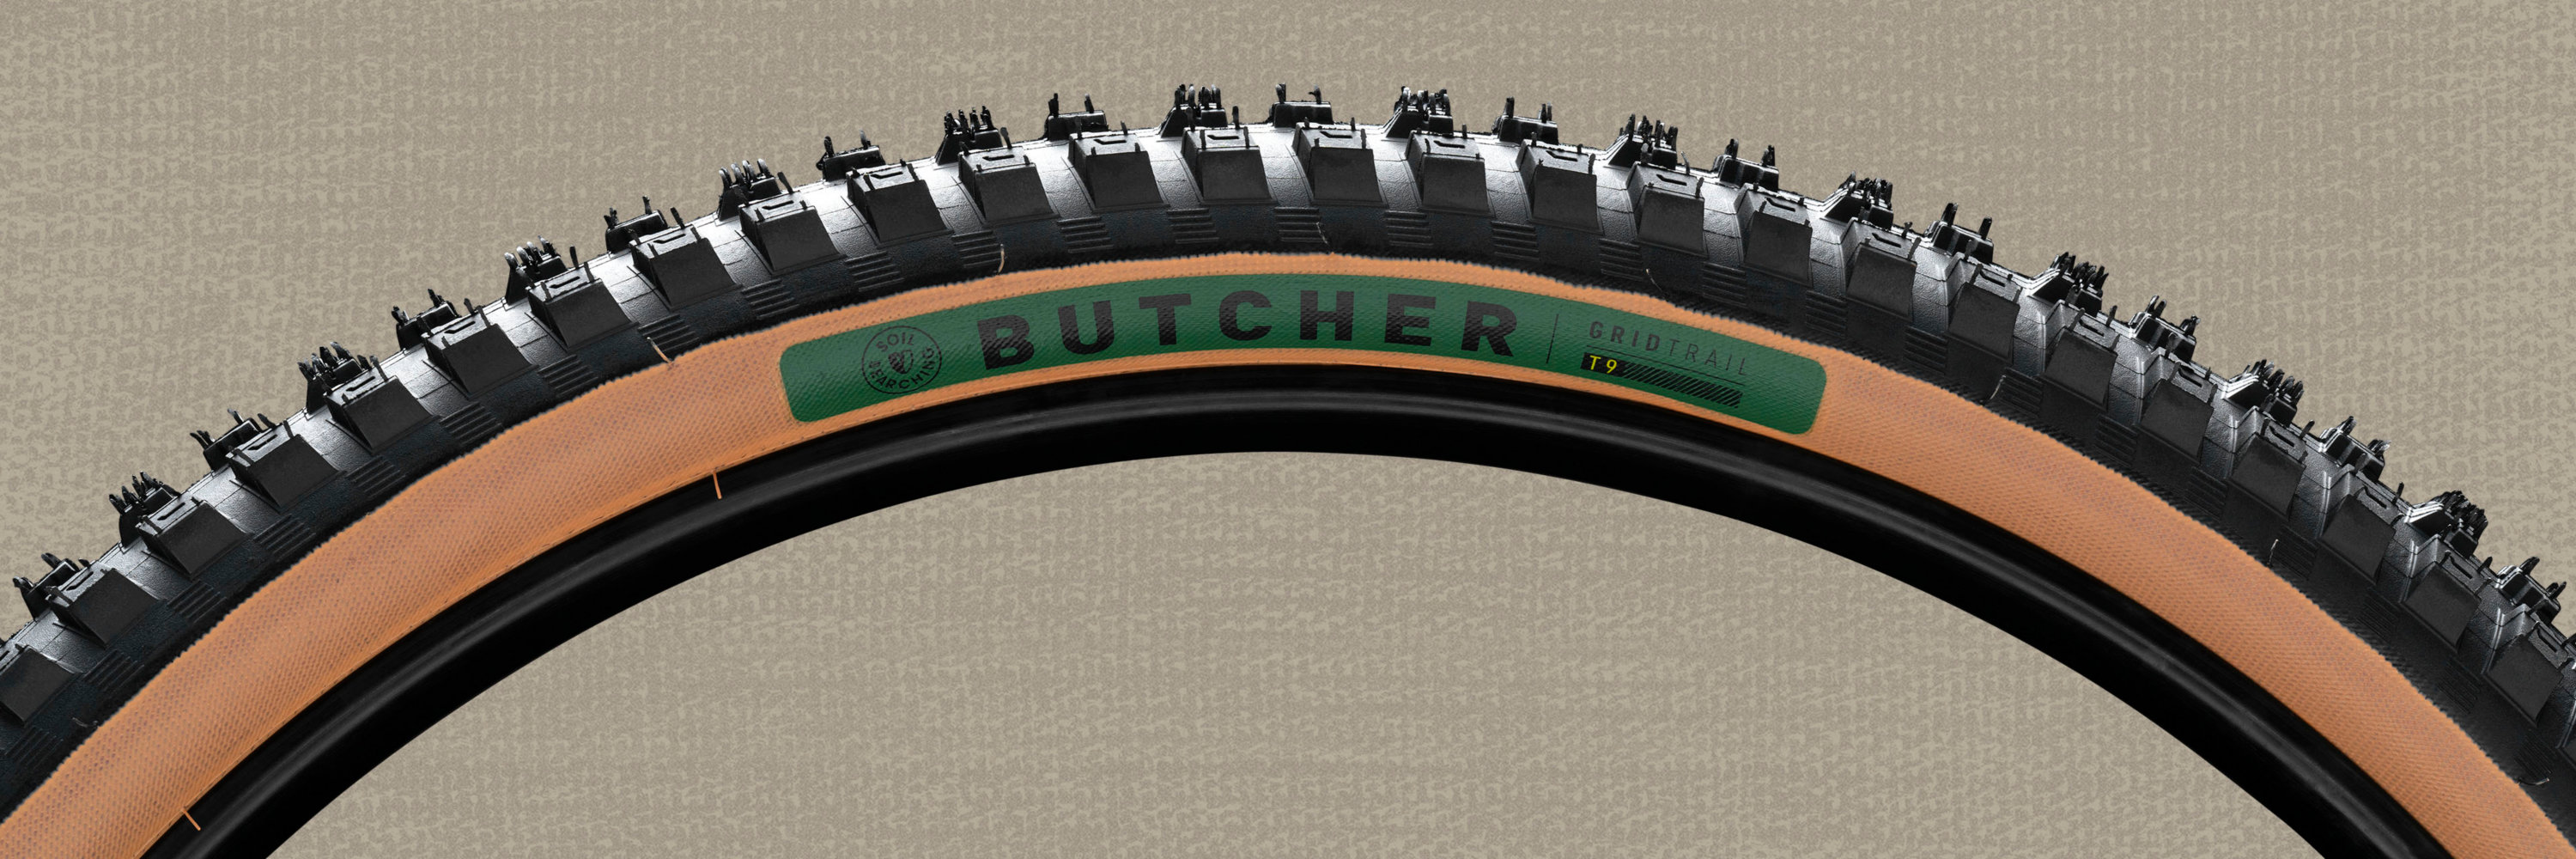 butcher mtb tire